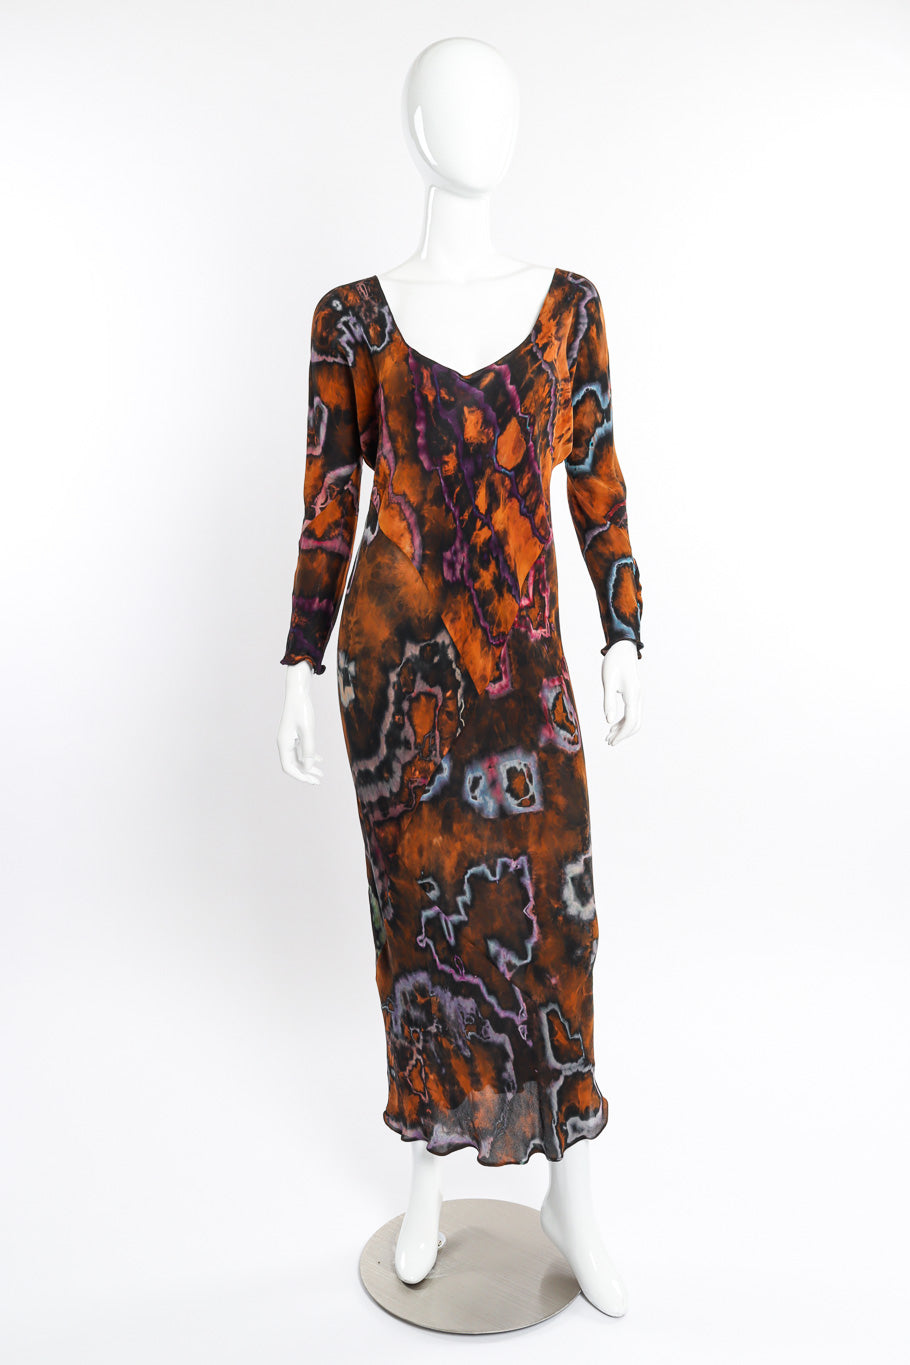 Silk Tie-Dye Bias Dress by Carter Smith on mannequin @recessla